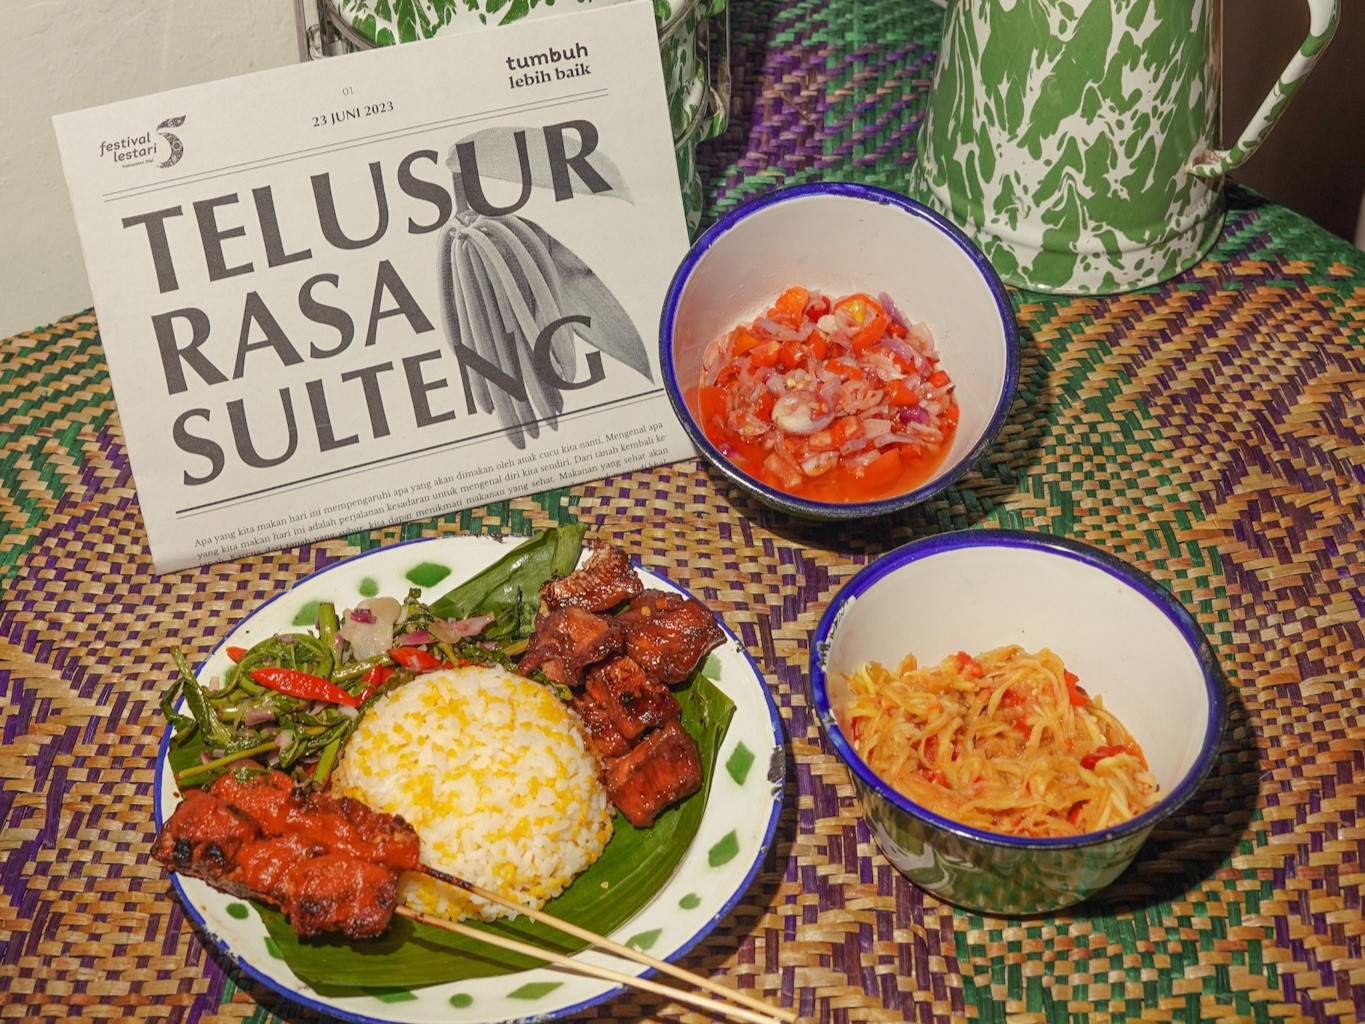 Nasi Peda Pelangi Launches <br> “Sehari-Rasa” Part 5: Sulteng